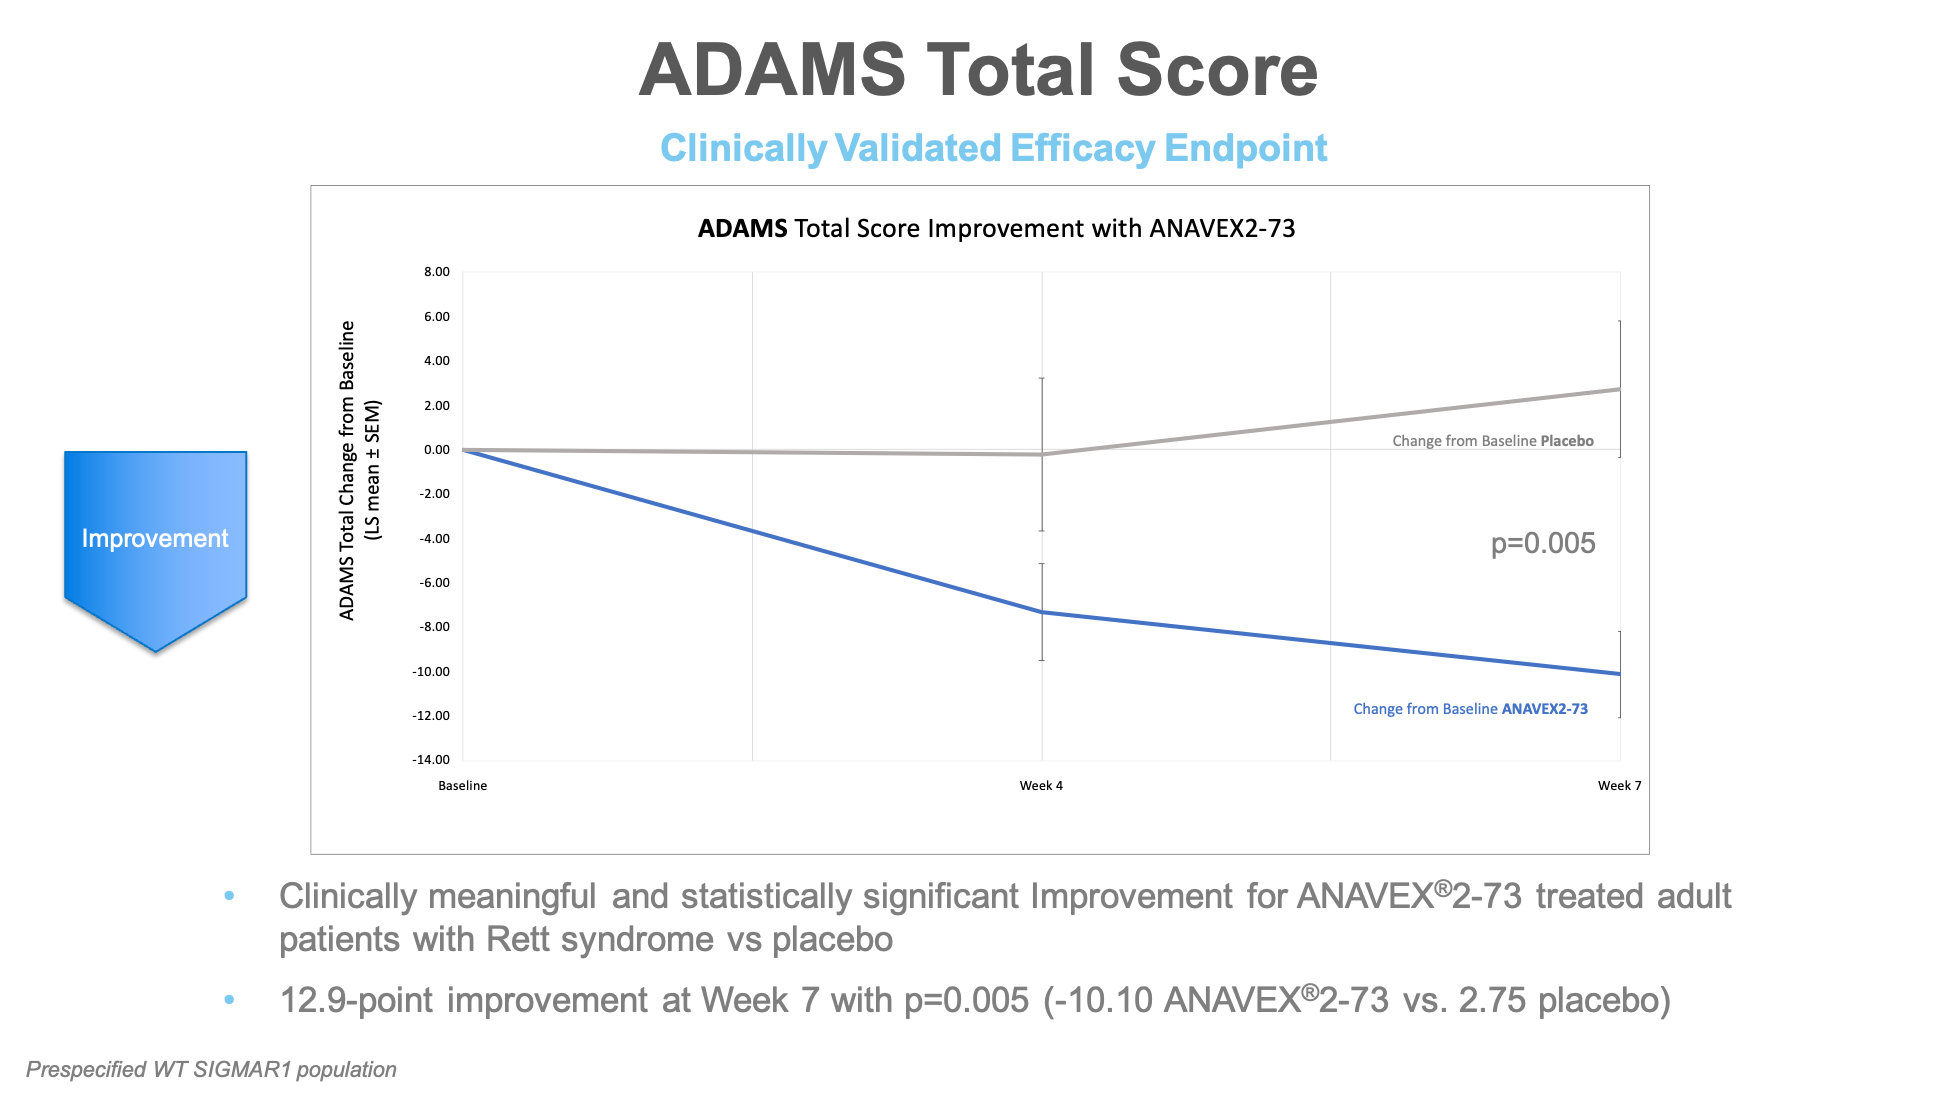 ADAMS Total Score